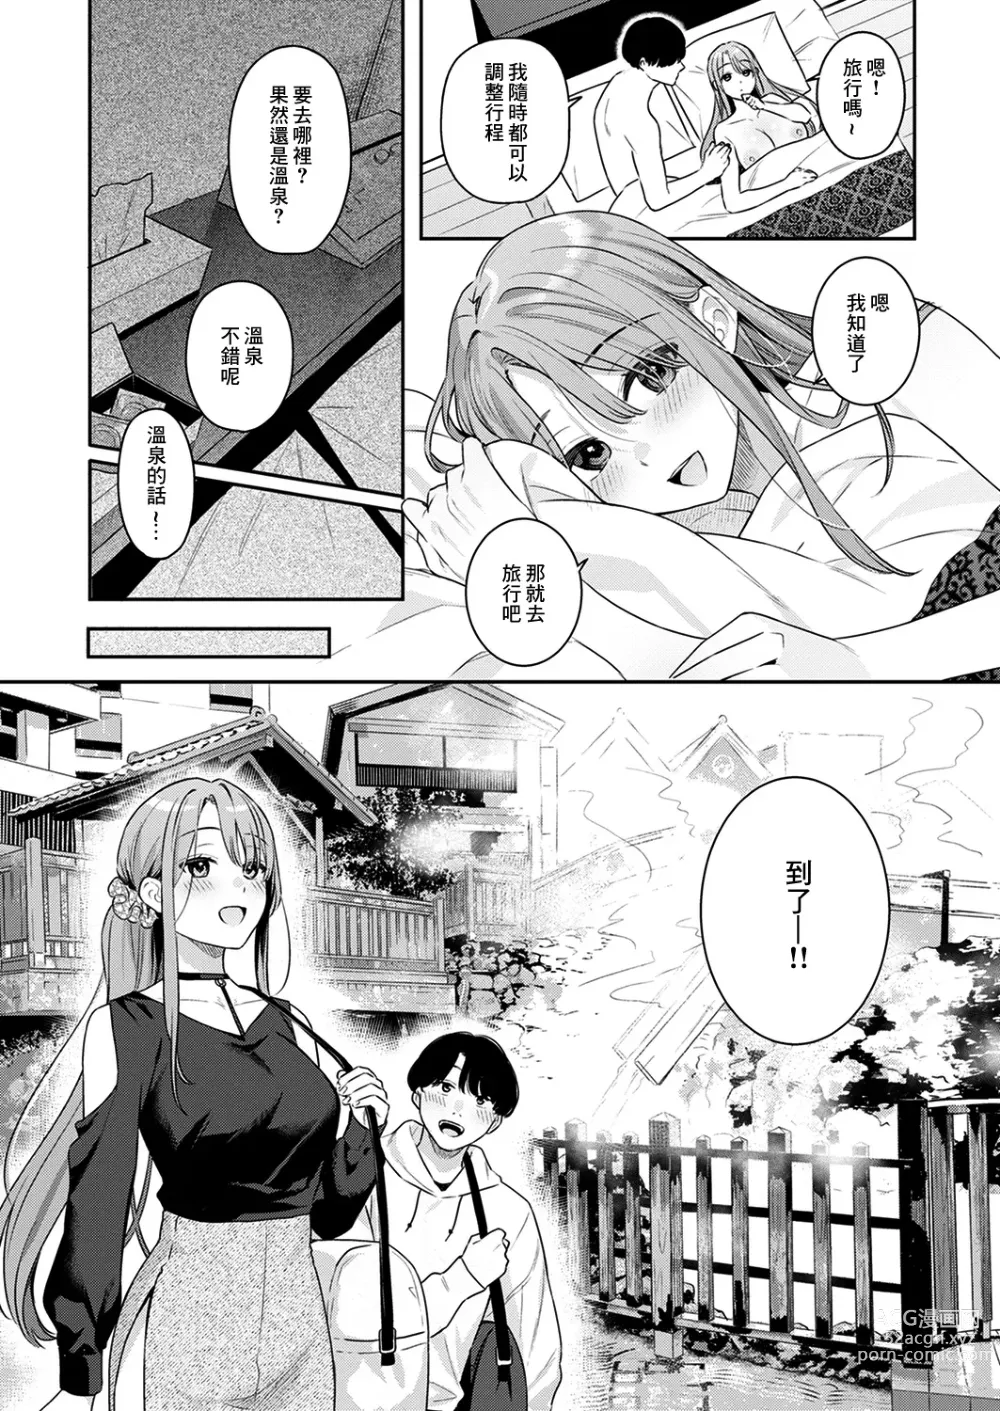 Page 8 of manga Otona no Issen Lesson 2